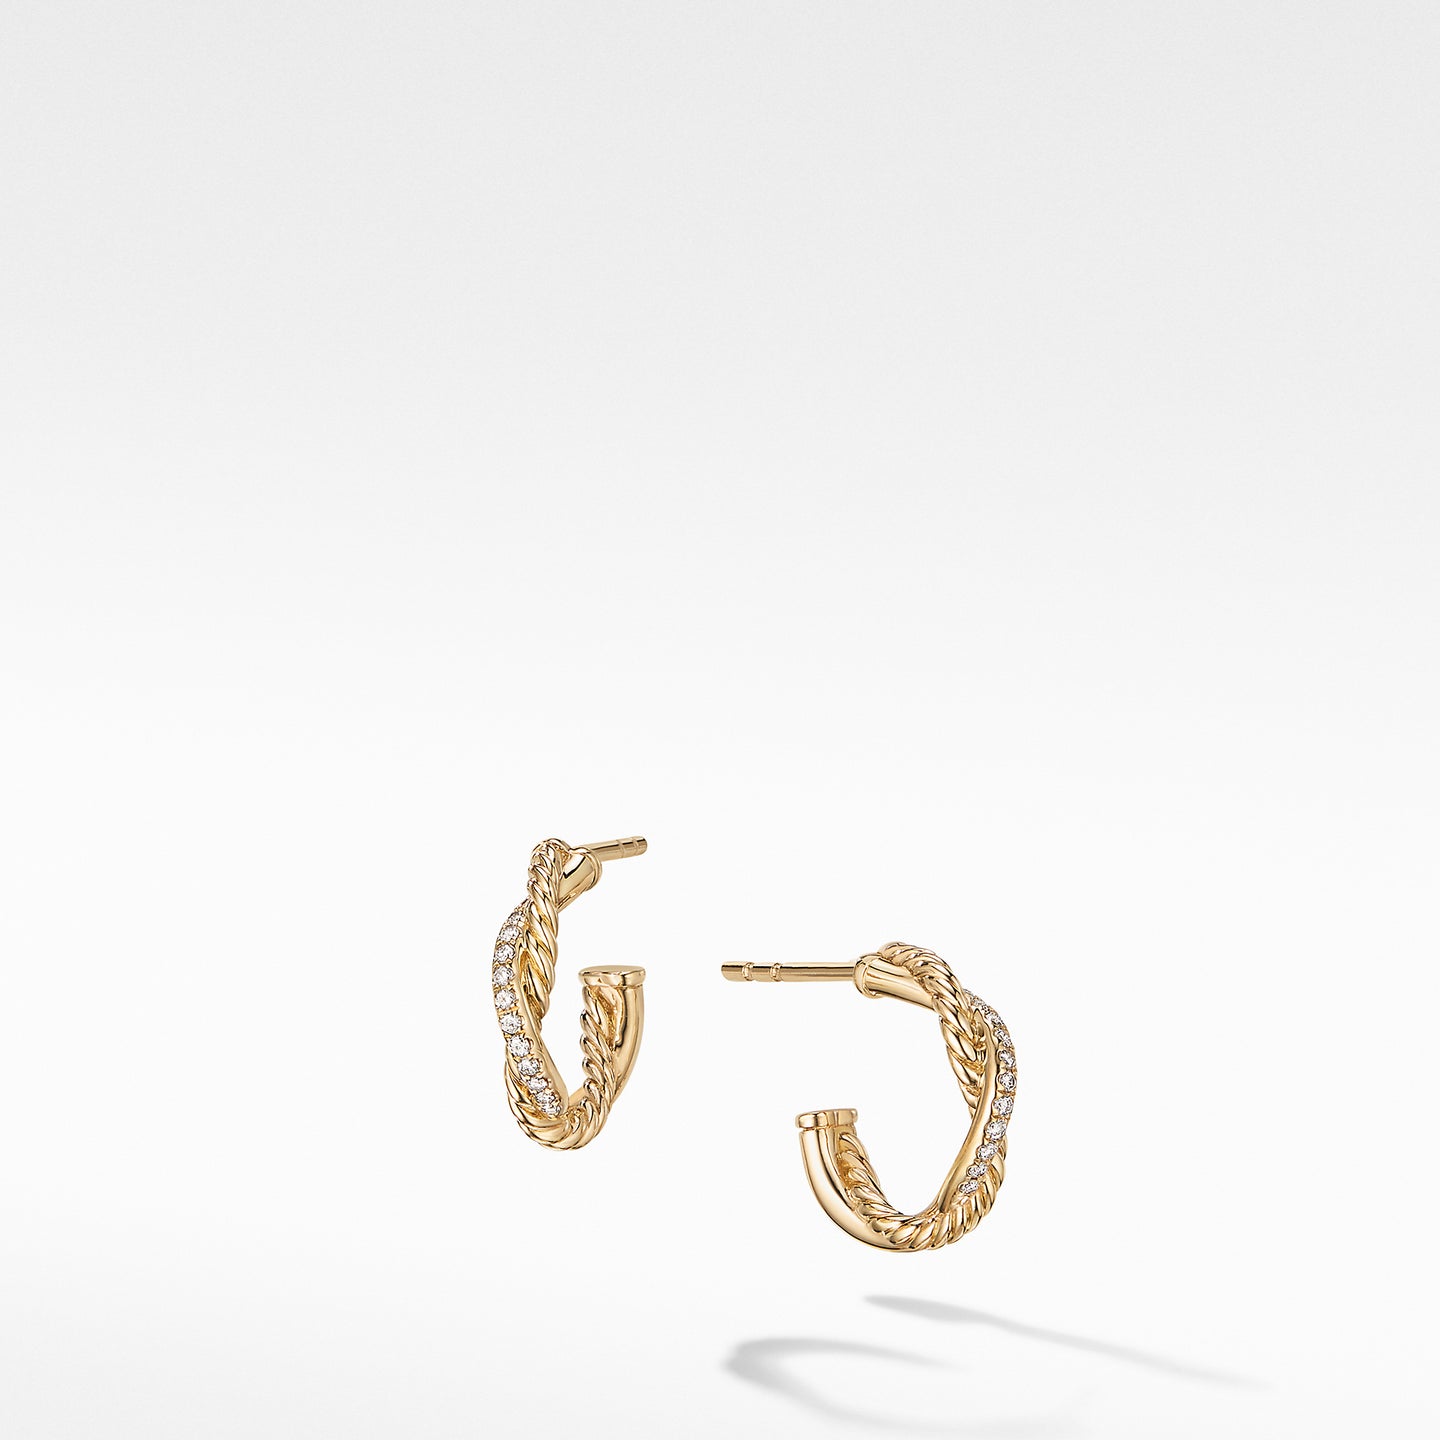 David Yurman Petite Infinity Huggie Hoop Earrings in 18K Yellow Gold with Diamonds